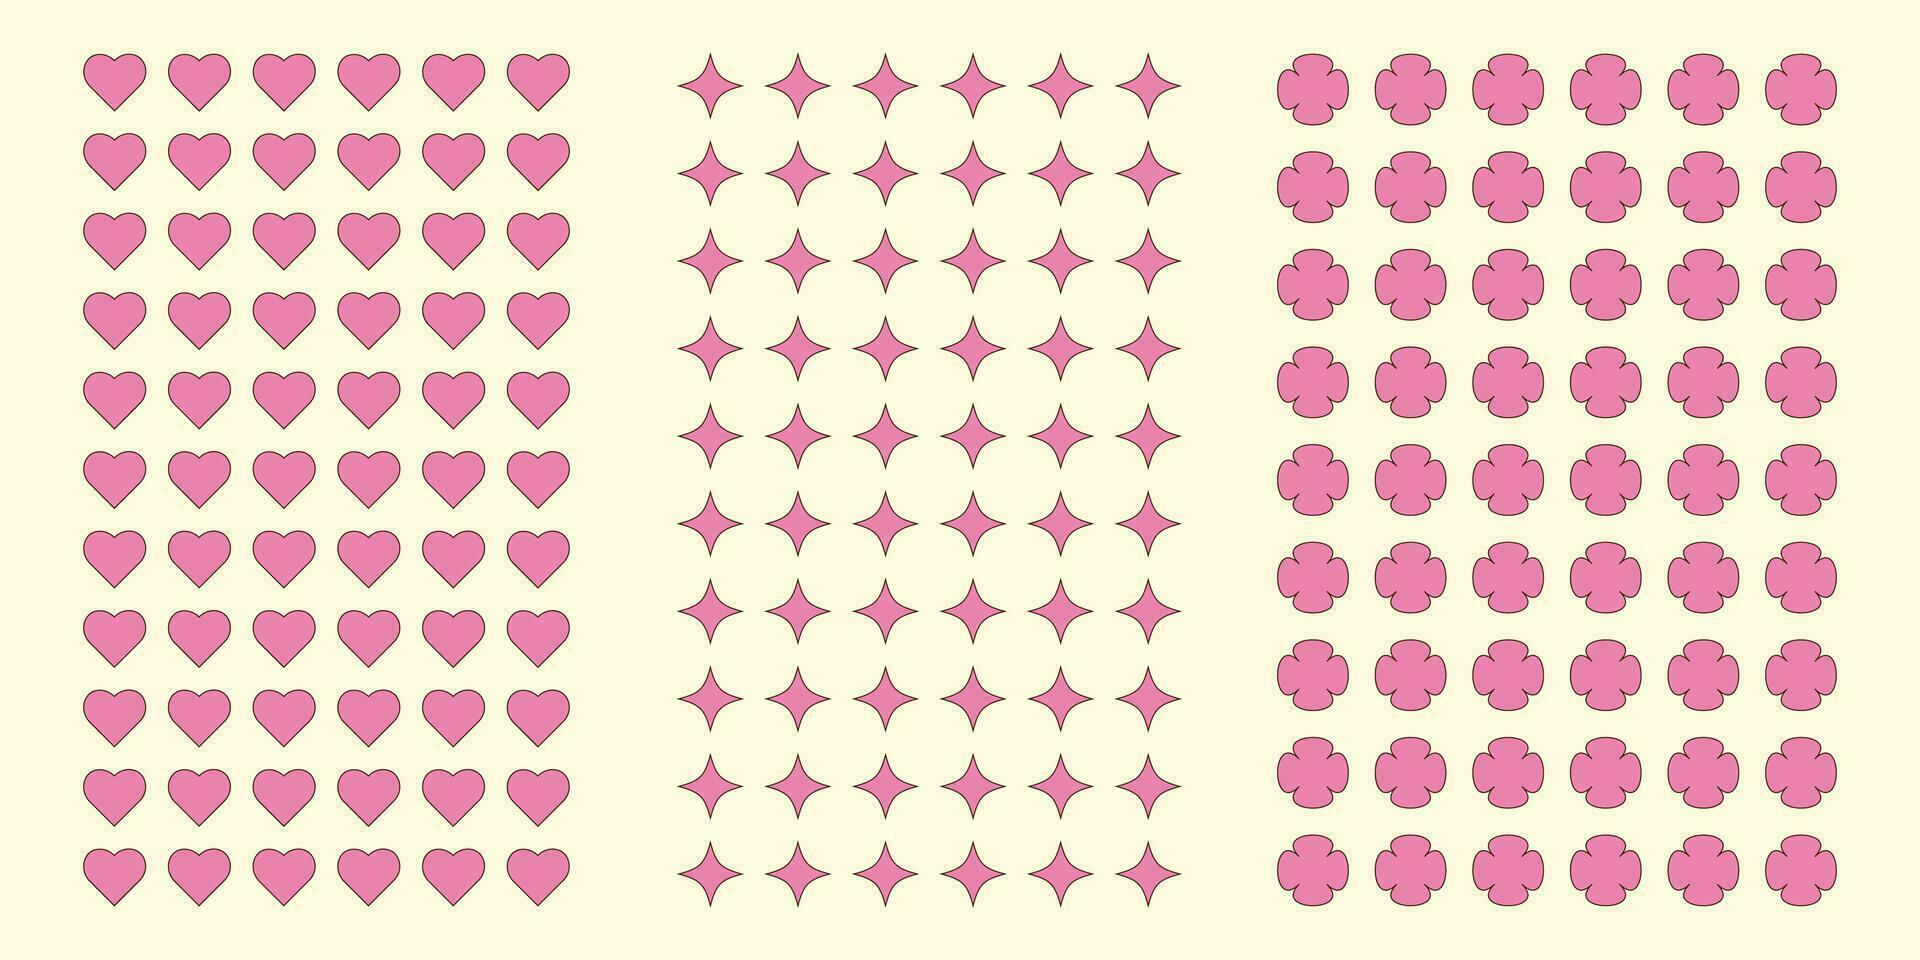 Geometric background retro style, heart, clover, quadrangular star, pink color vector